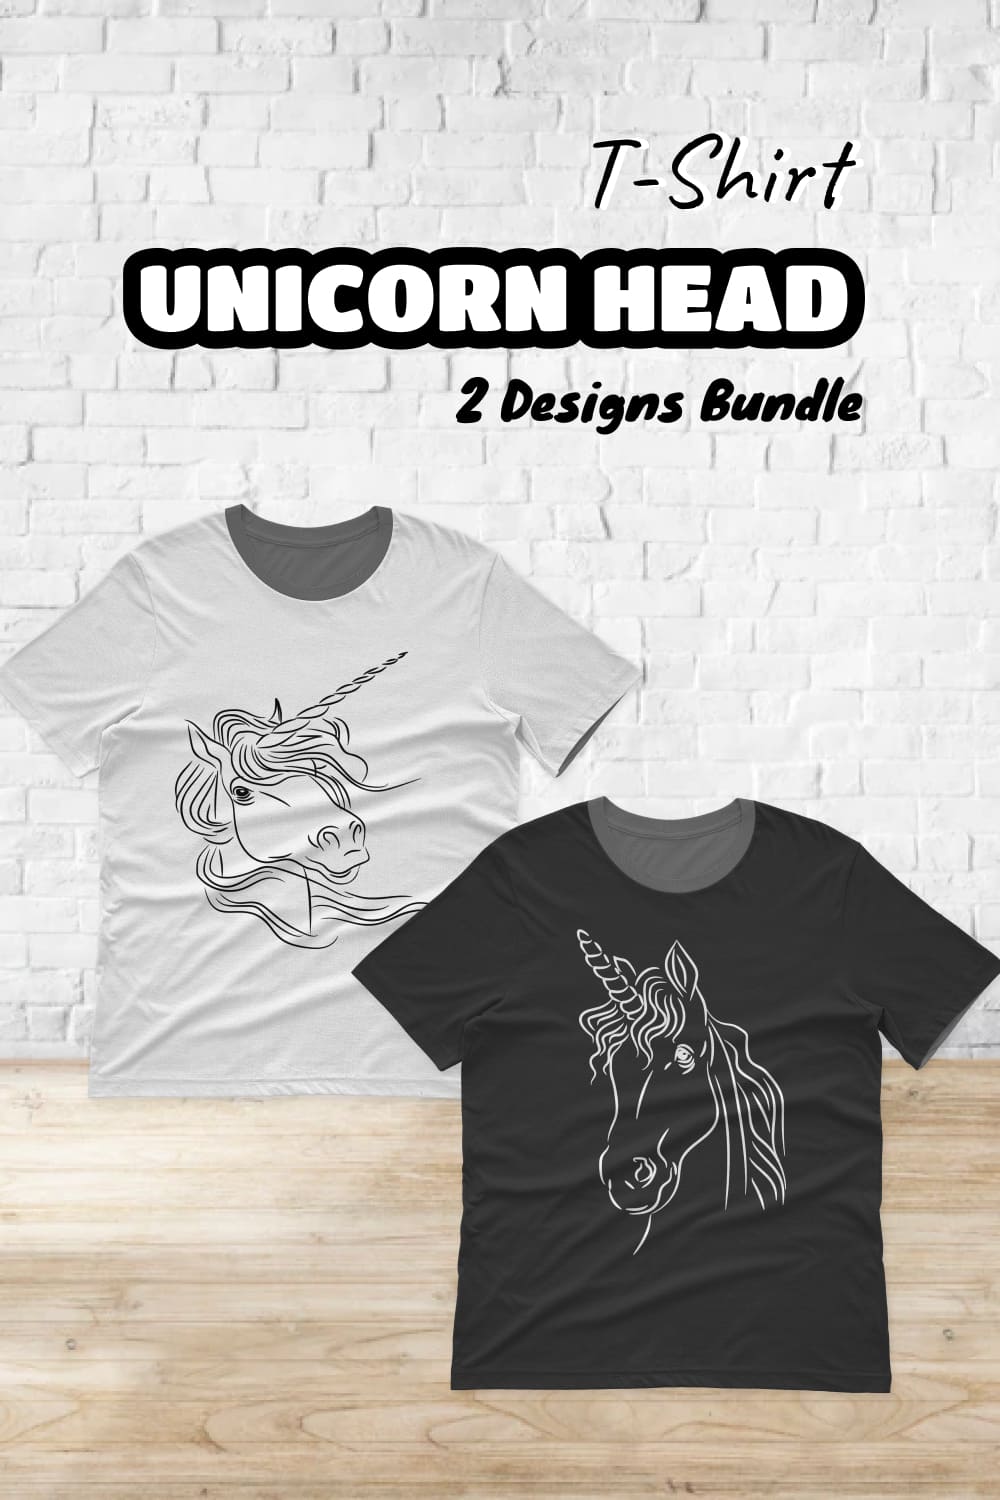 Unicorn Head T-shirt Designs Bundle - Pinterest.